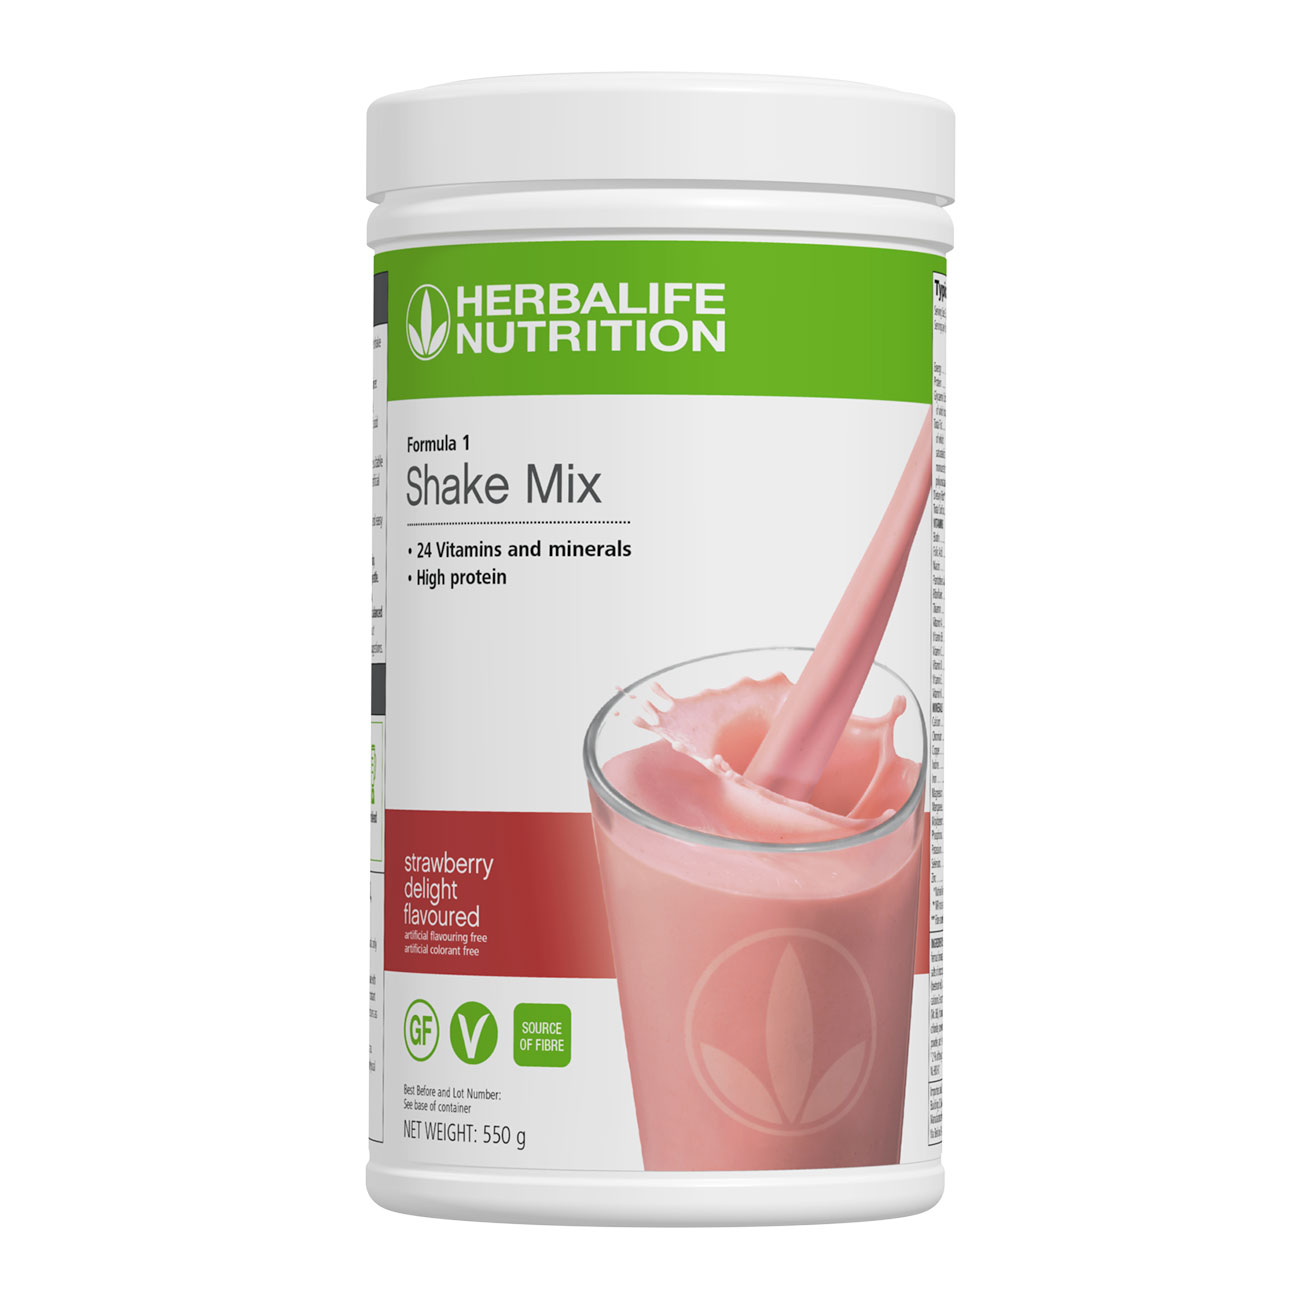 Formula 1 Shake Mix Strawberry Delight Flavoured product shot